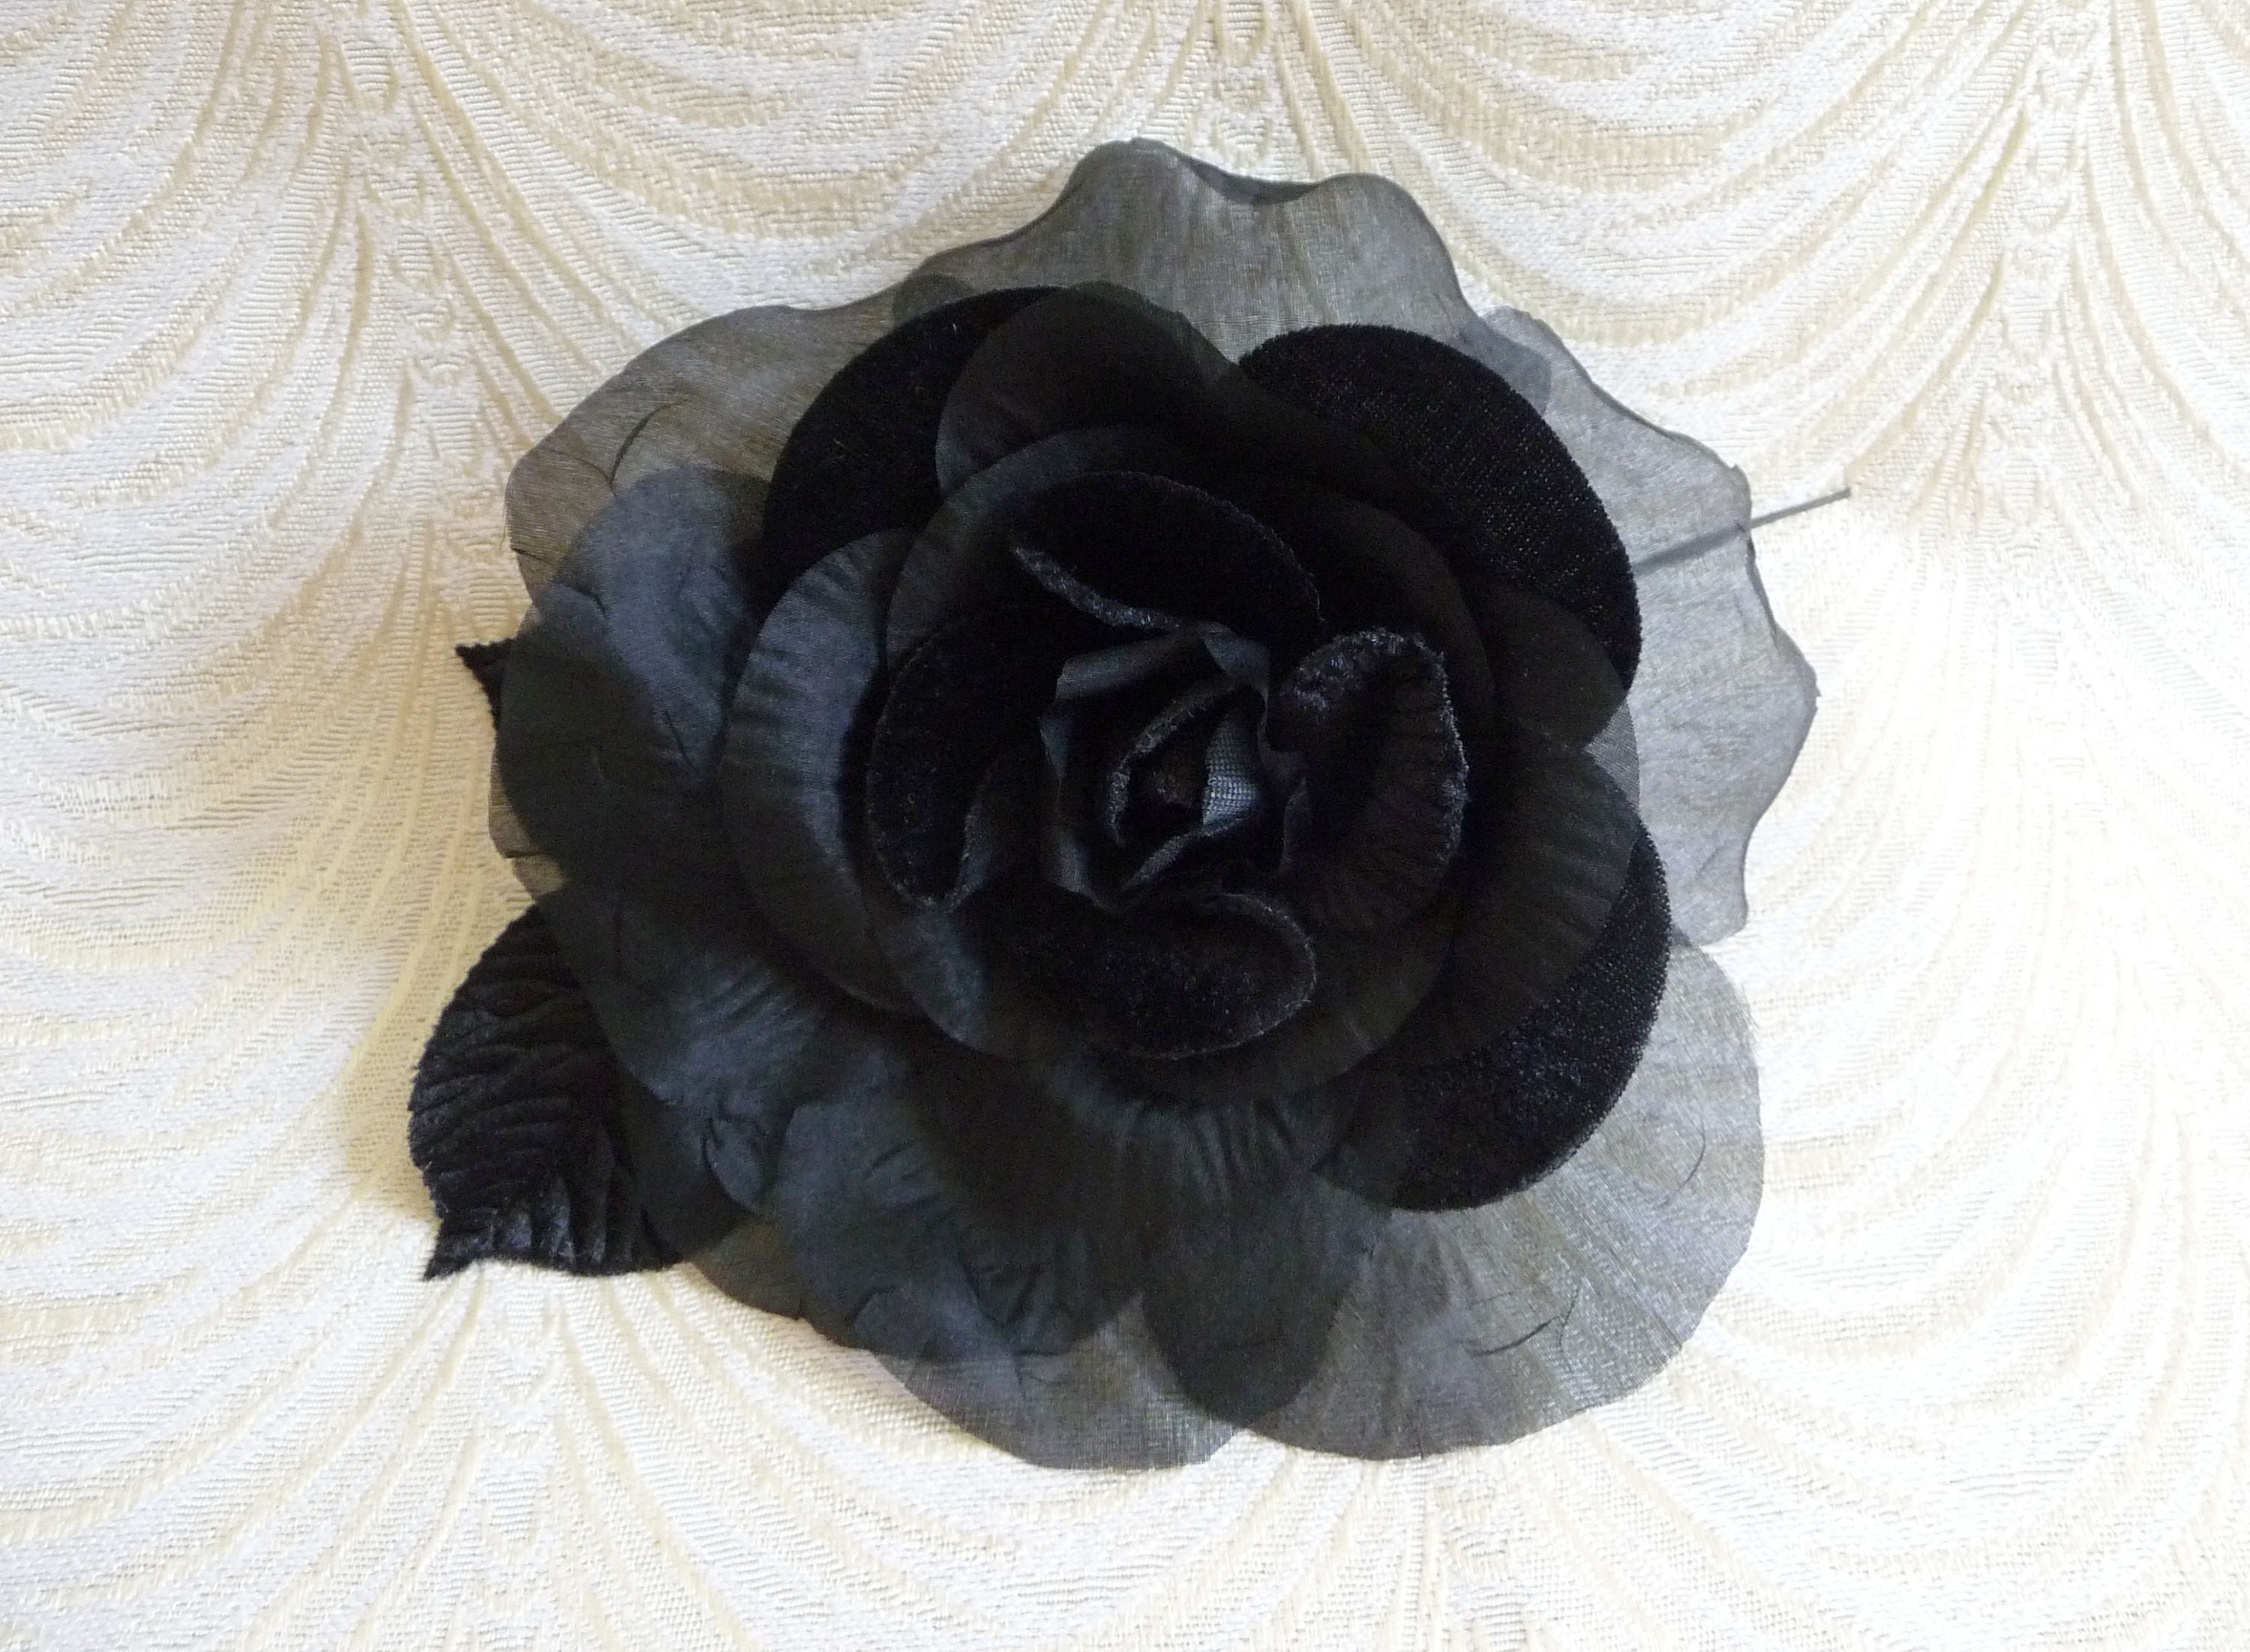 Silk Rose Heads, 12pcs, Black Artificial Flowers